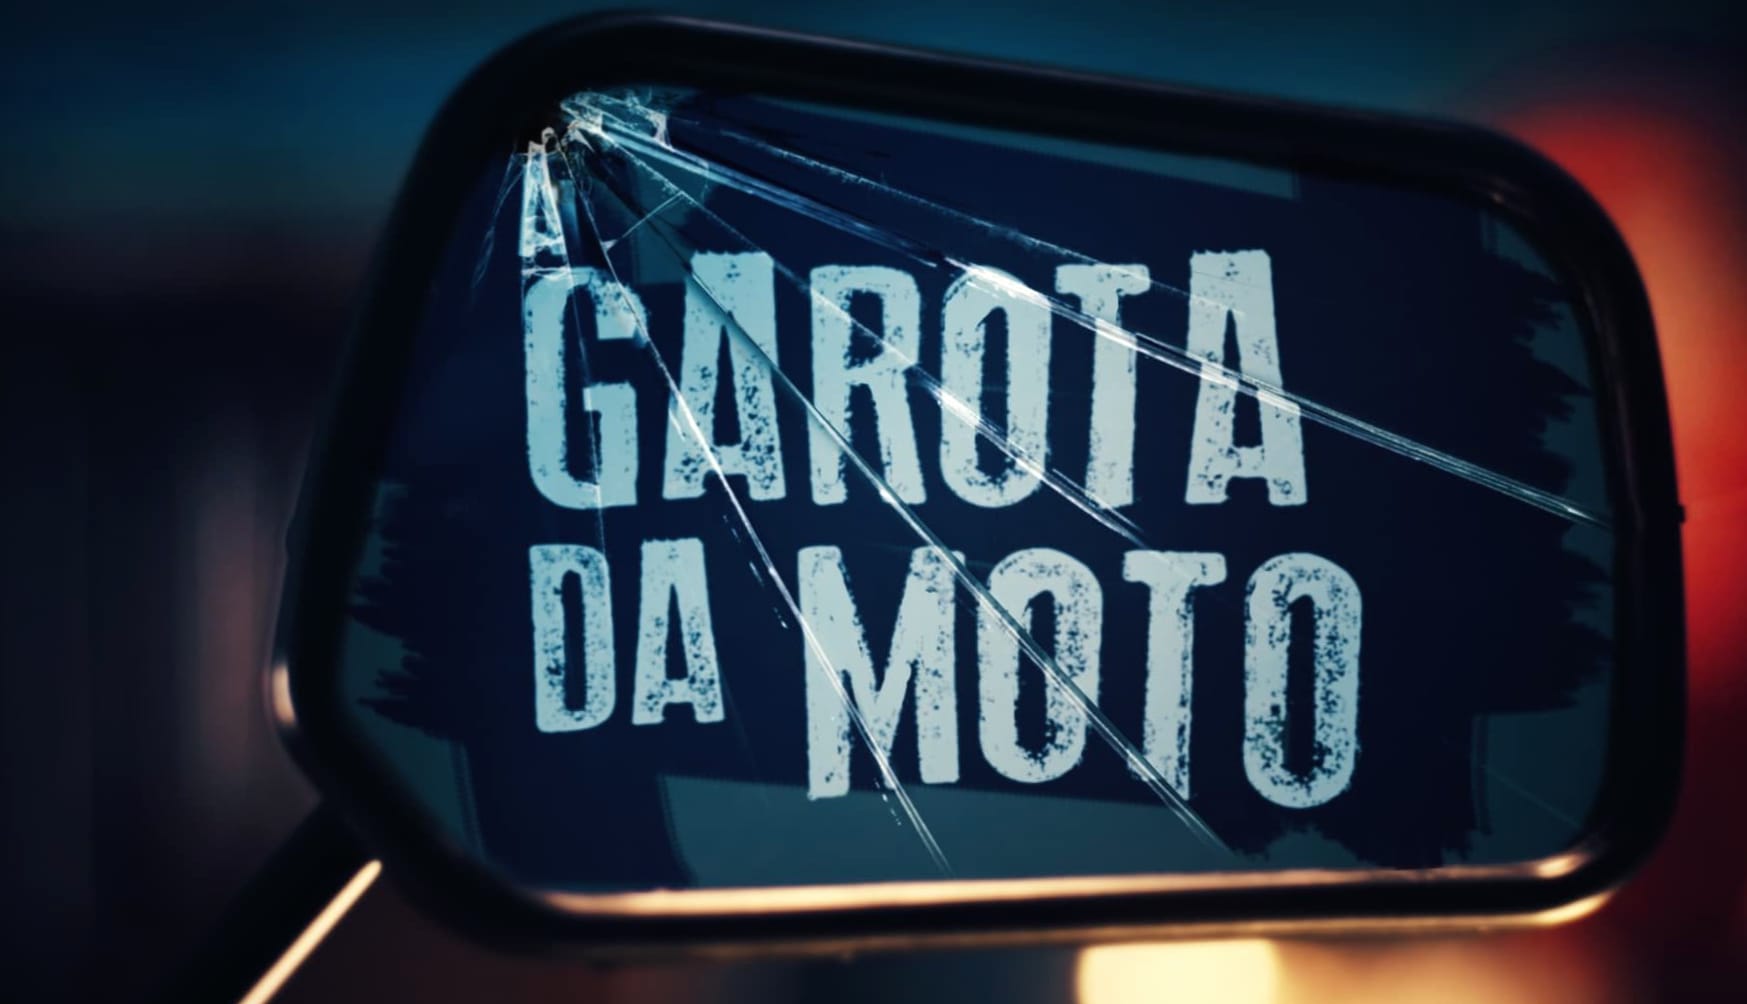 A Garota da Moto at 640 x 960 iPhone 4 size wallpapers HD quality